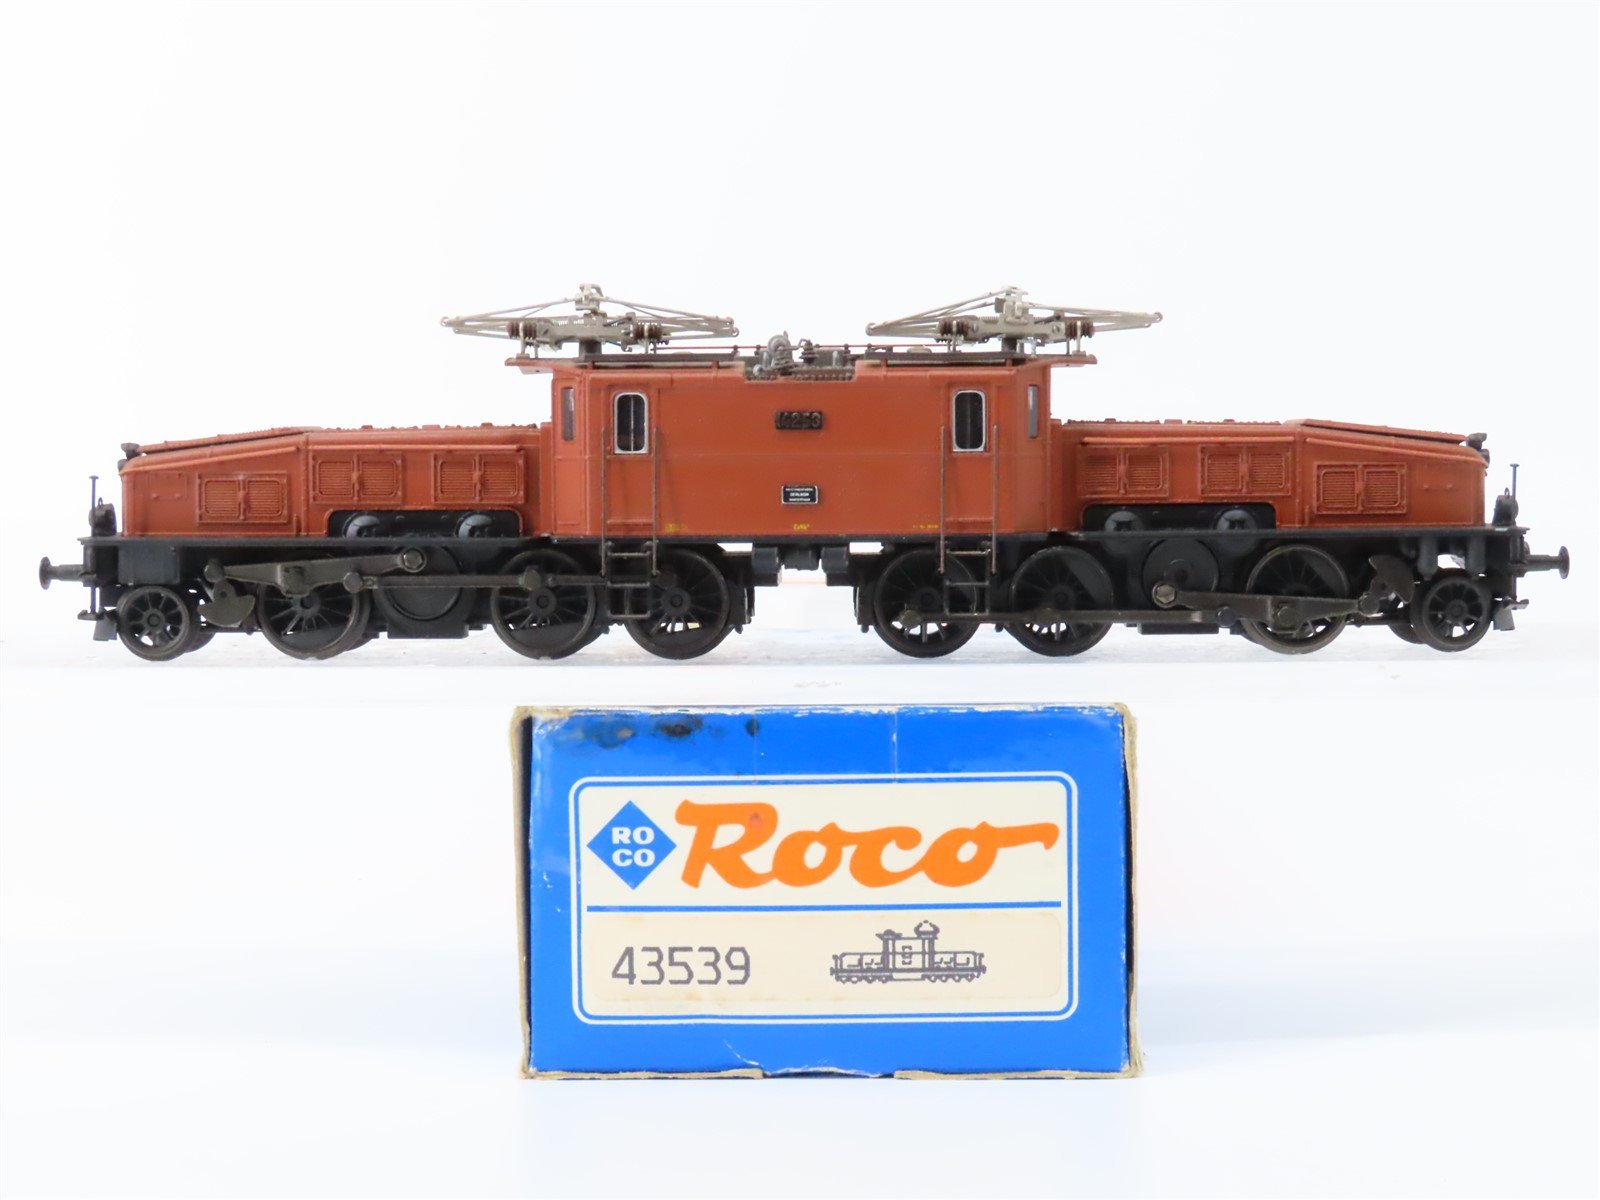 HO Scale Roco 43539 SBB Swiss Ce 6/8 II "Crocodile" Electric Locomotive #14253